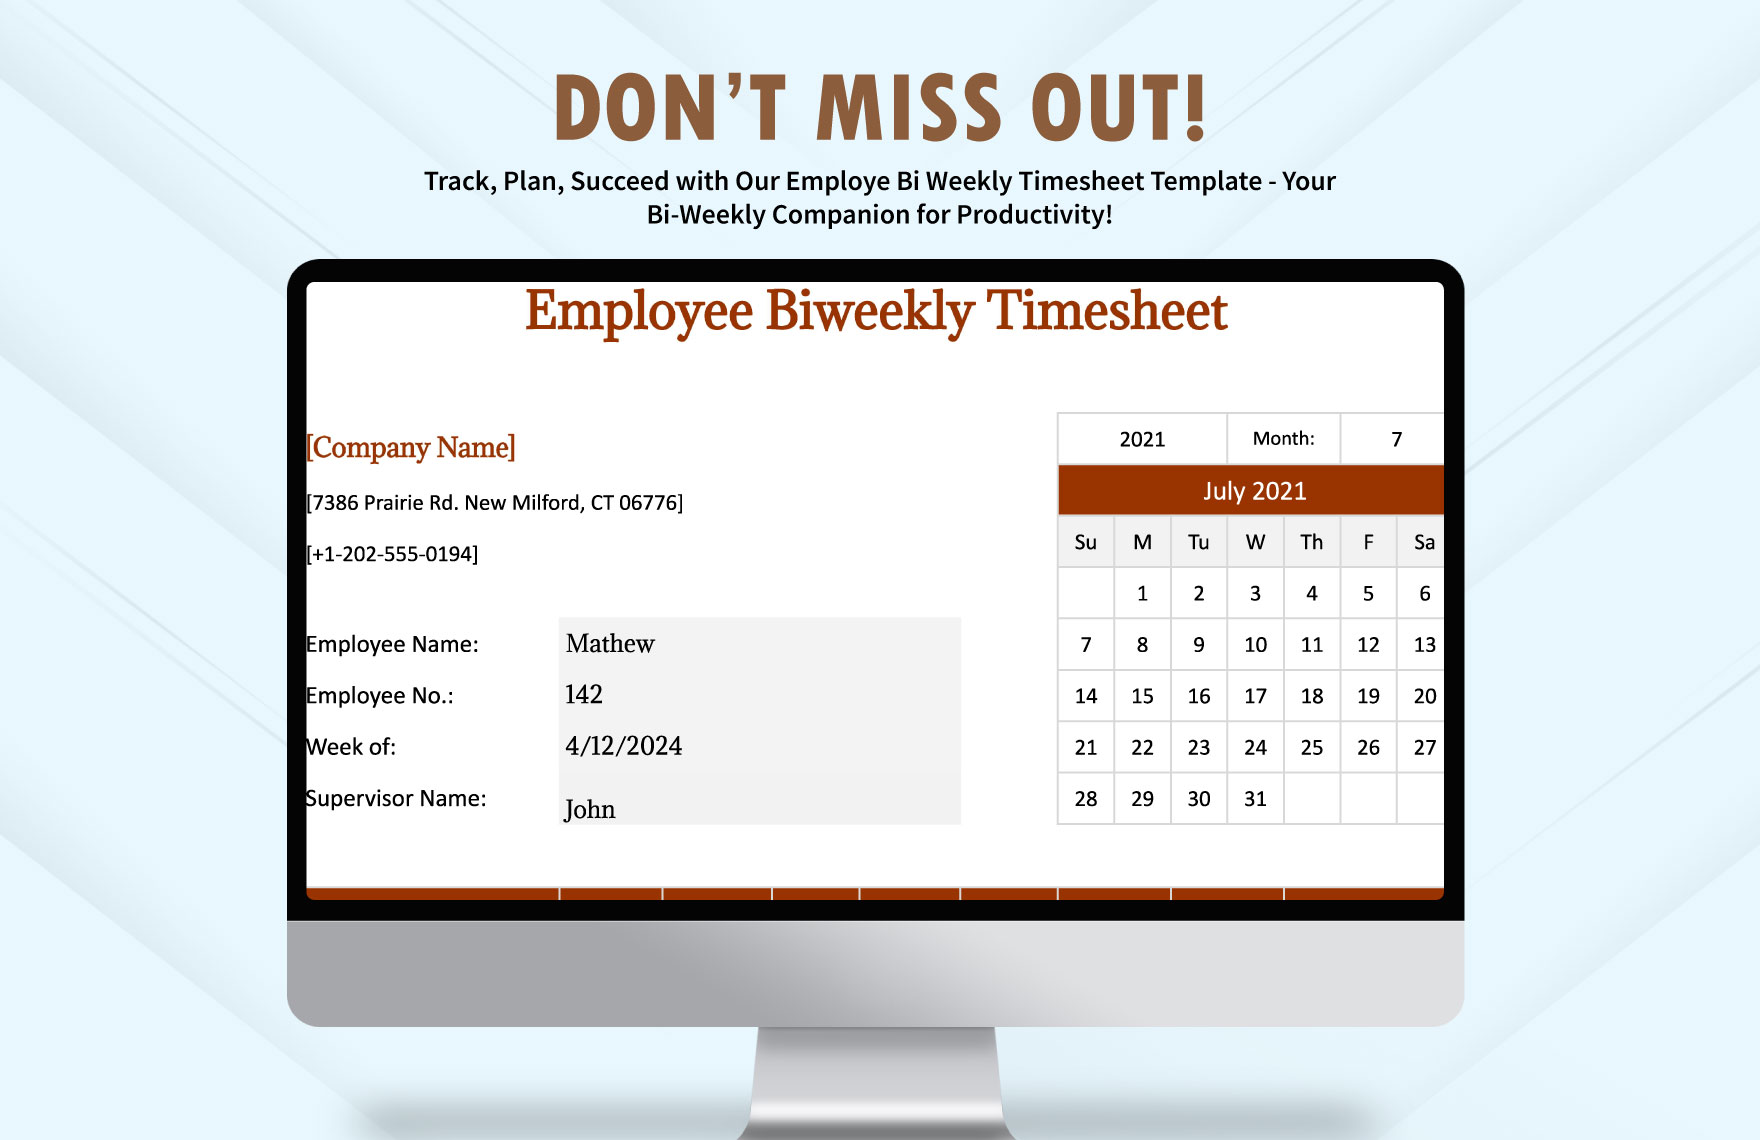 Employee Bi weekly Timesheet Template